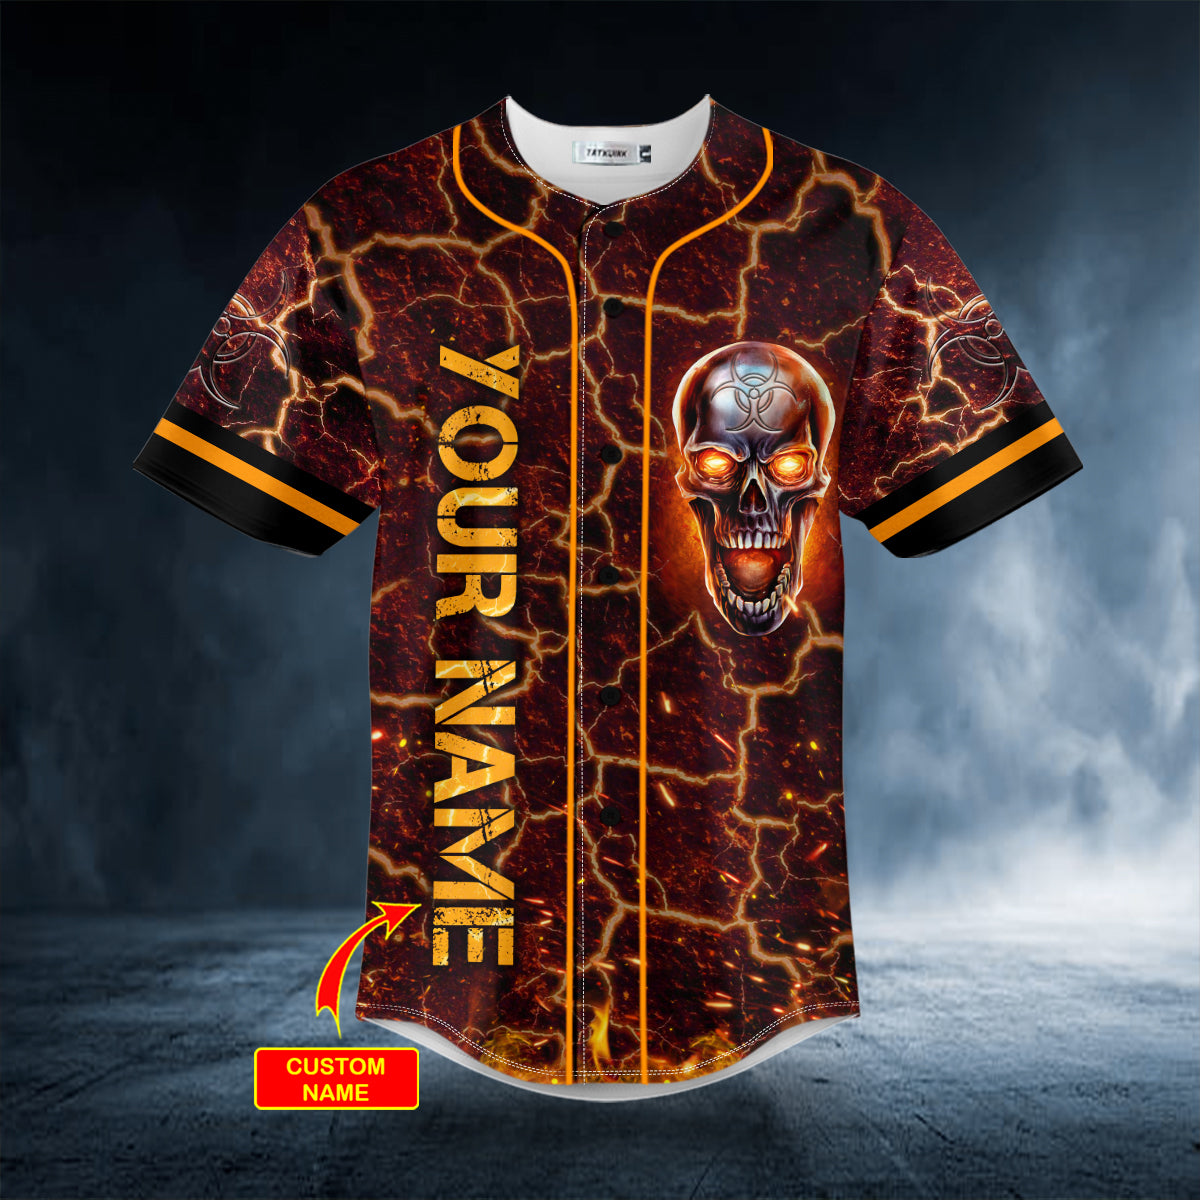 fire metallic biohazard skull custom baseball jersey bsj 957 1swxo